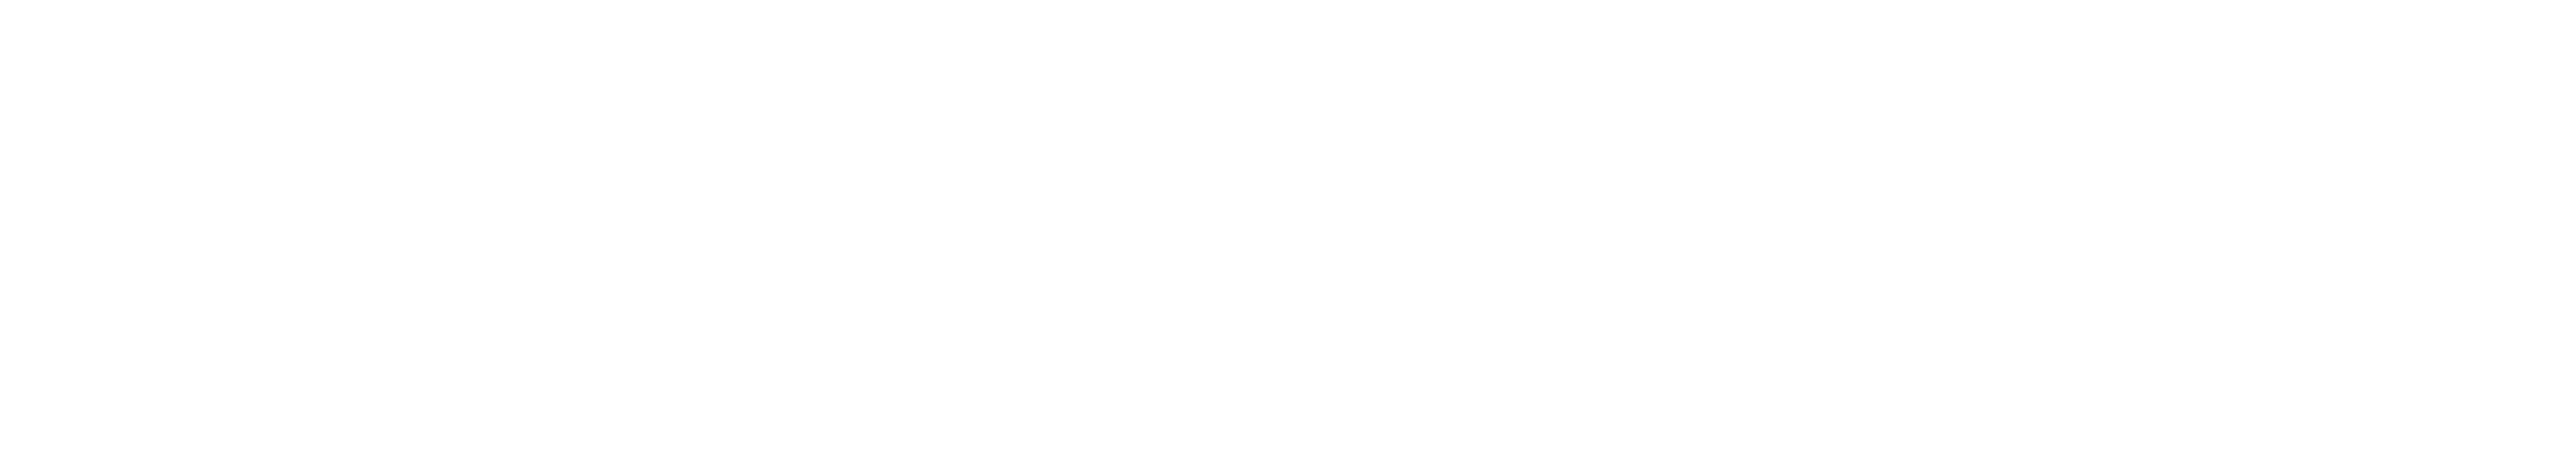 CEH animal management logo